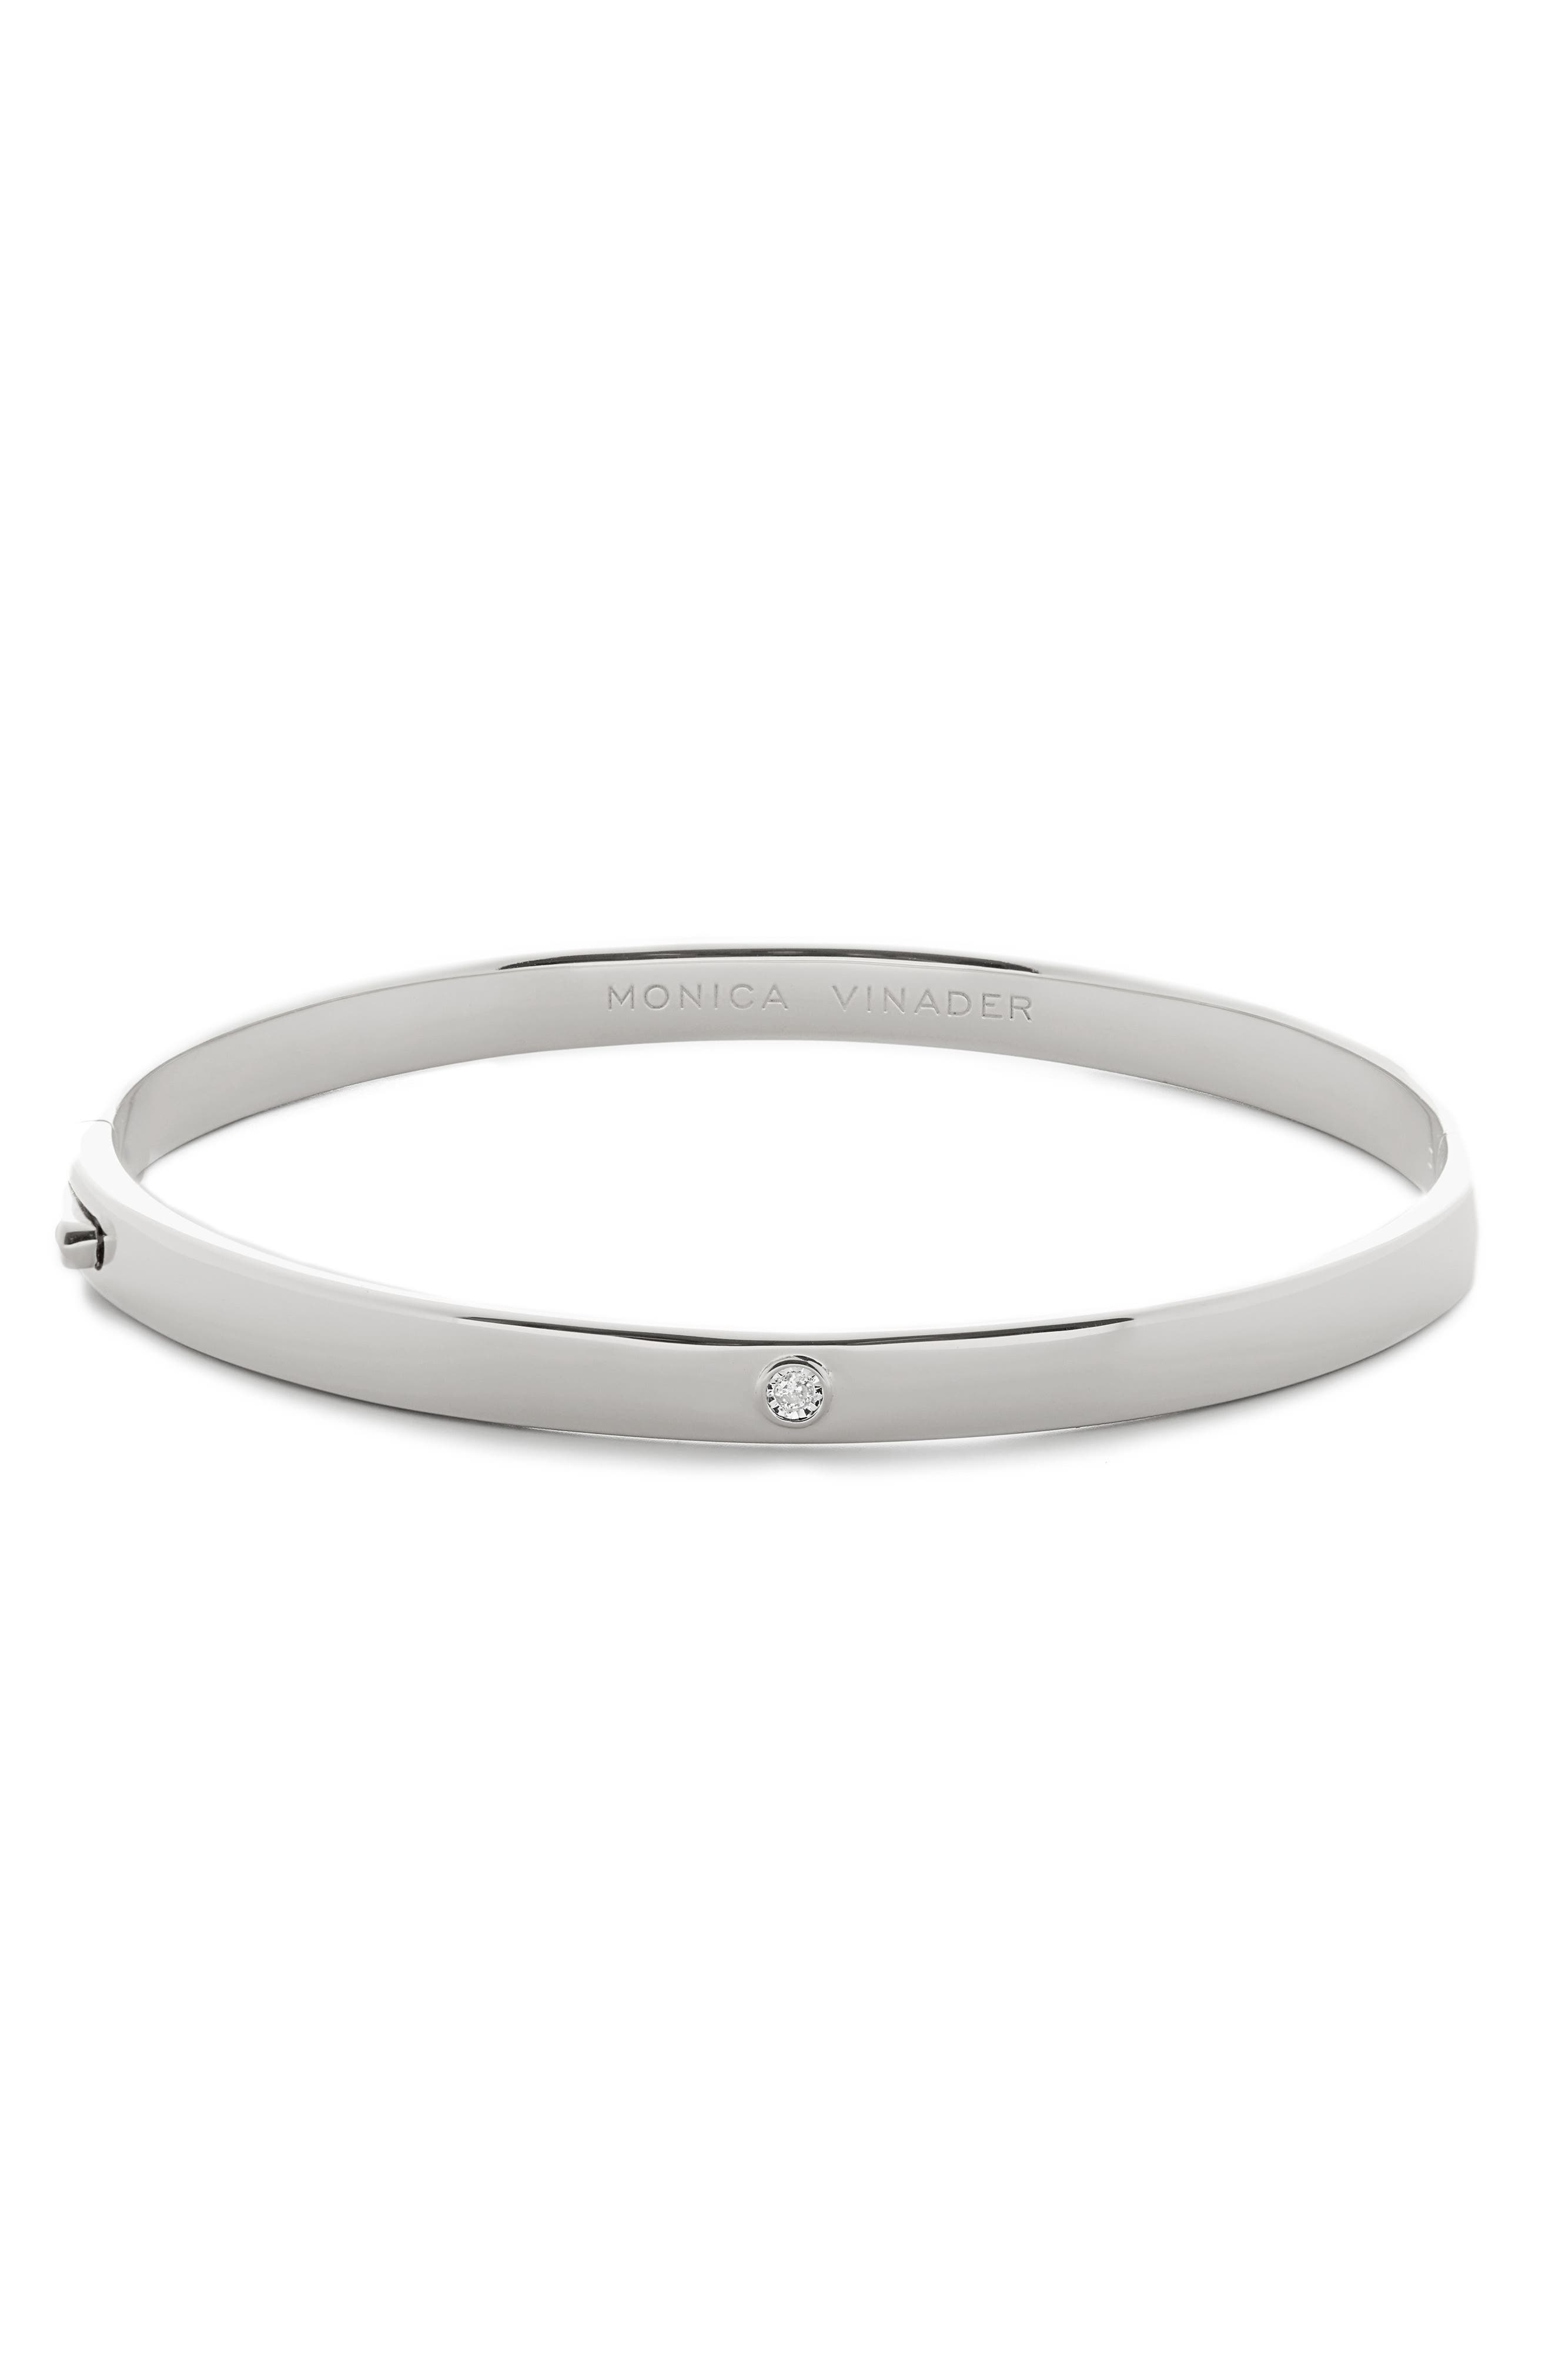 Double heart strand clip bracelet bangle love women gift ladies colour silver UK 